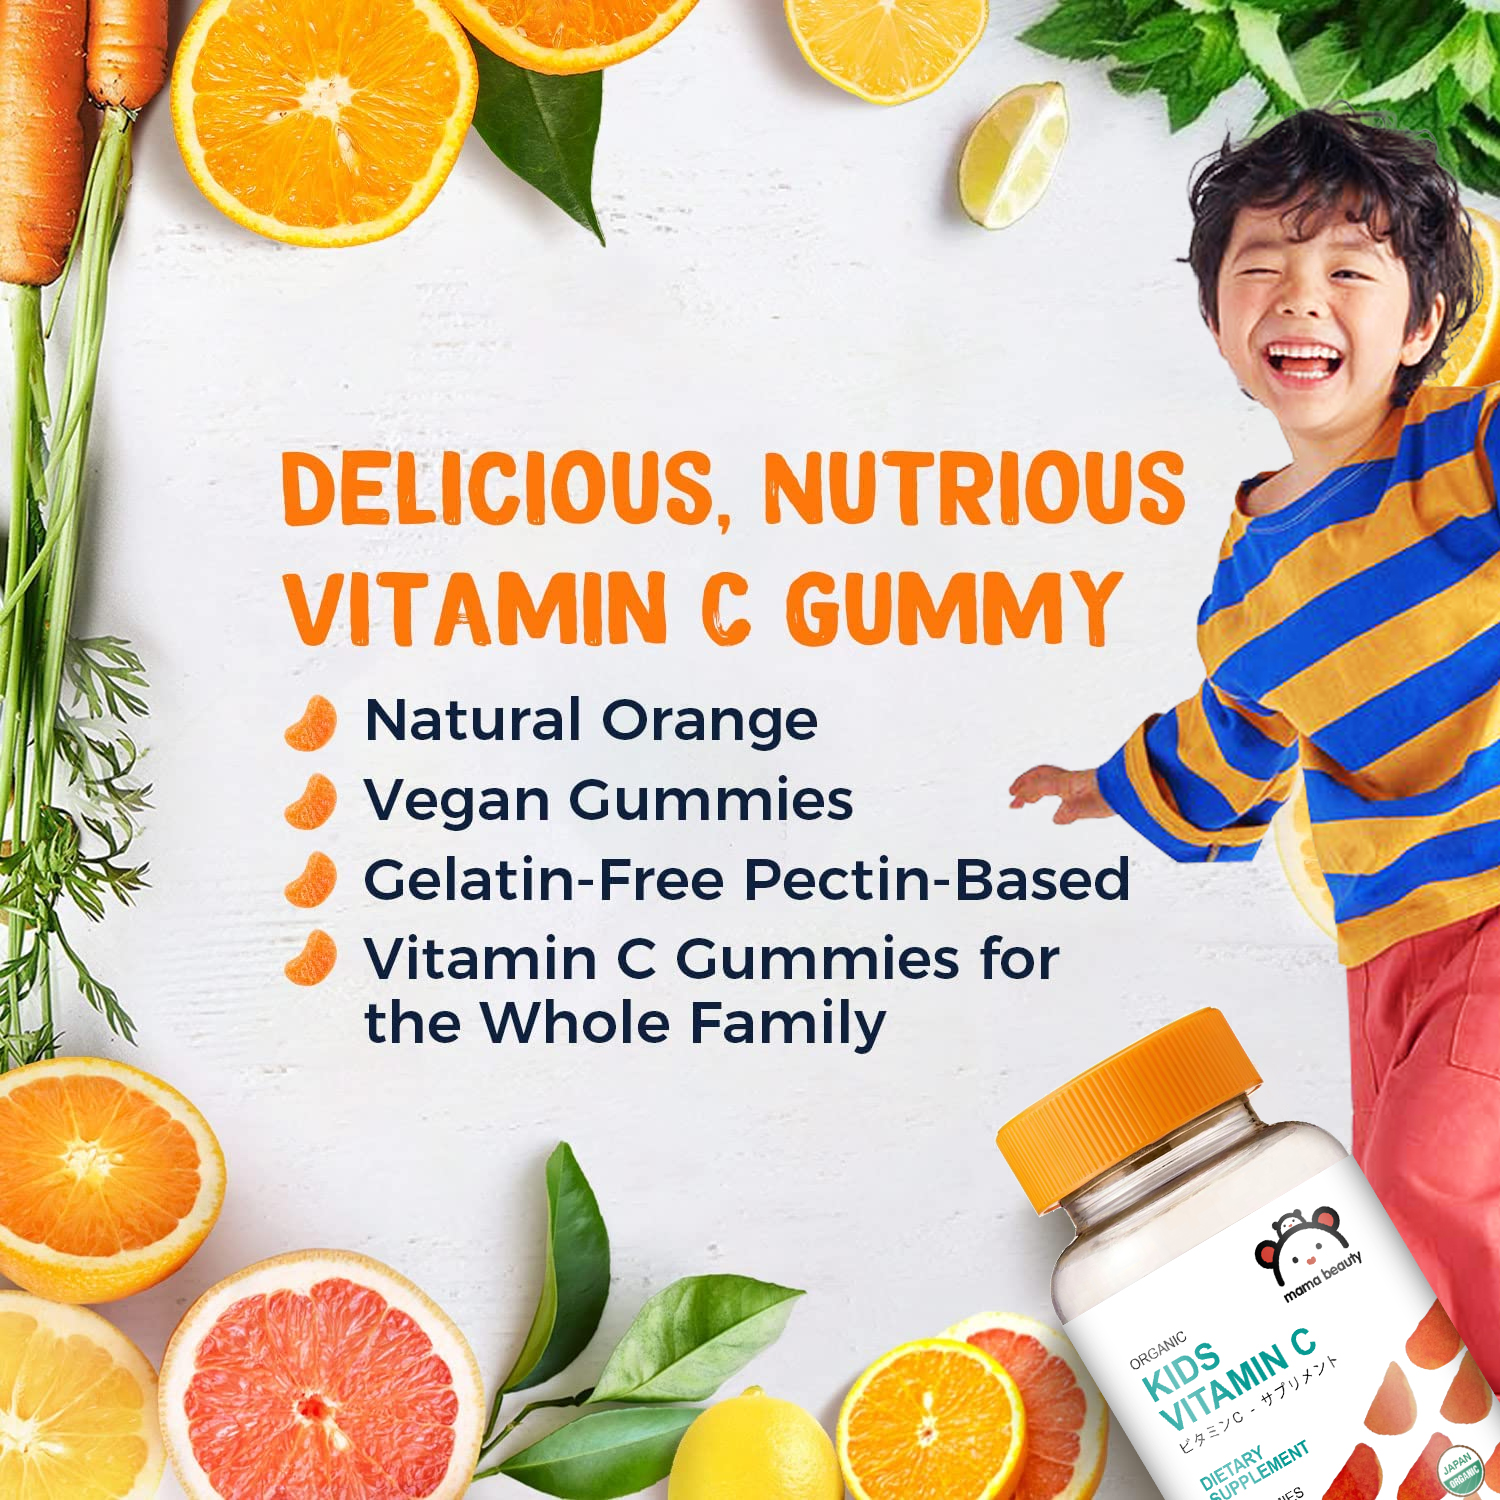 Mama Beauty Vitamin C Gummies วิตามินดี3 เด็ก อาหารเสริมเด็ก วิตามินสําหรับเด็ก วิตามินซี เด็ก กลิ่นโคล่า อาหารเสริมสําหรับเด็ก